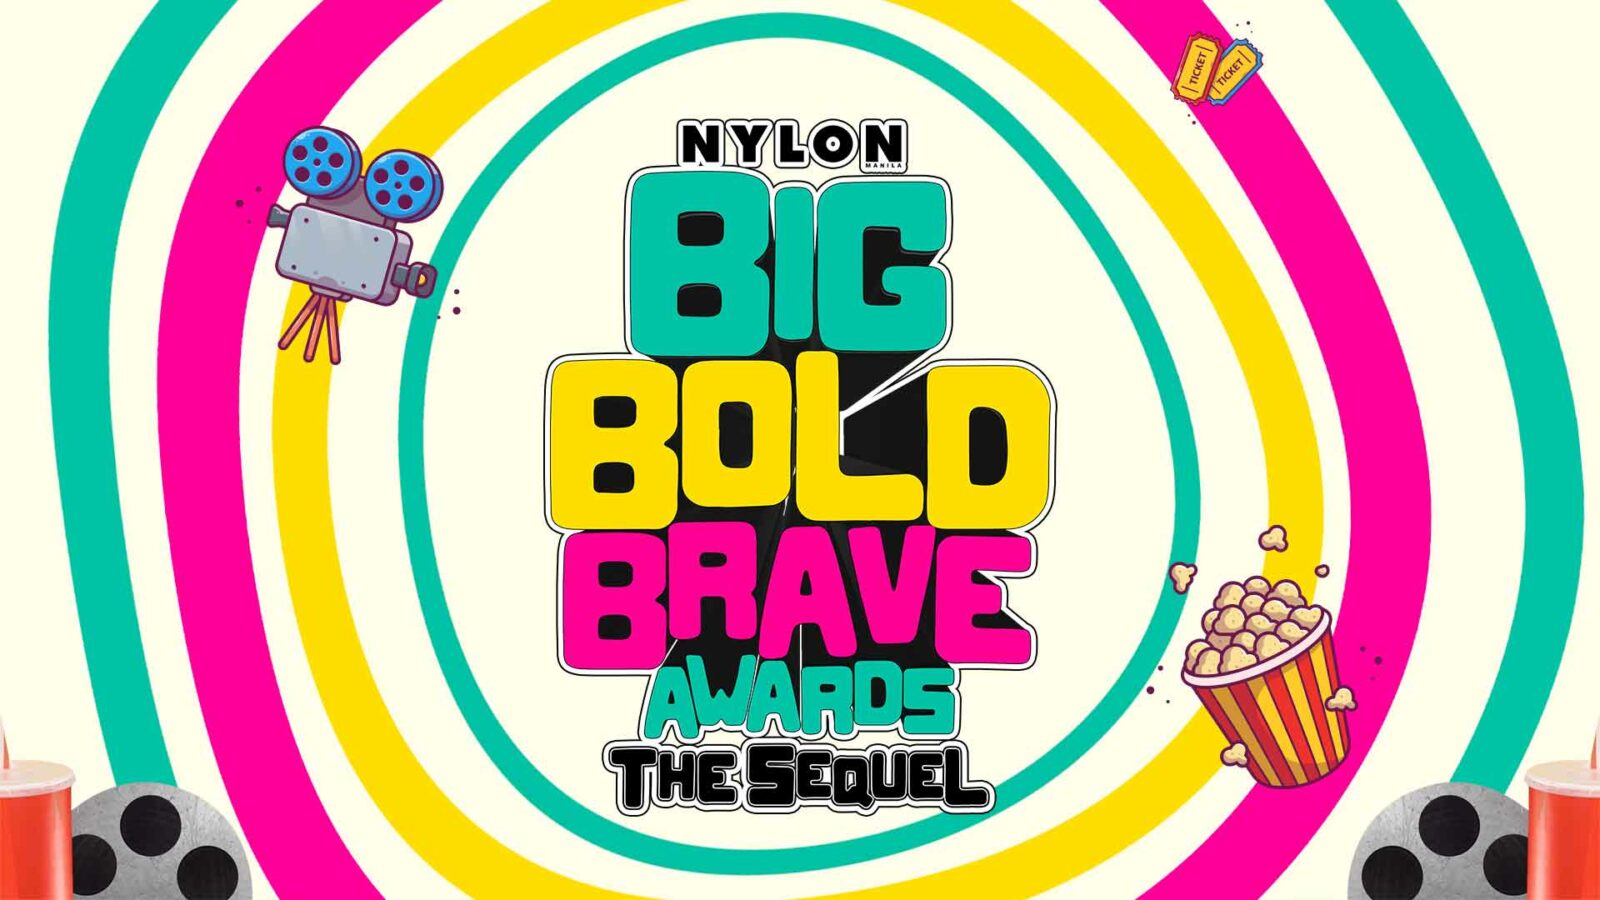 NYLON-Manila-Big-Bold-Brave-Awards-The-Sequel-nominees